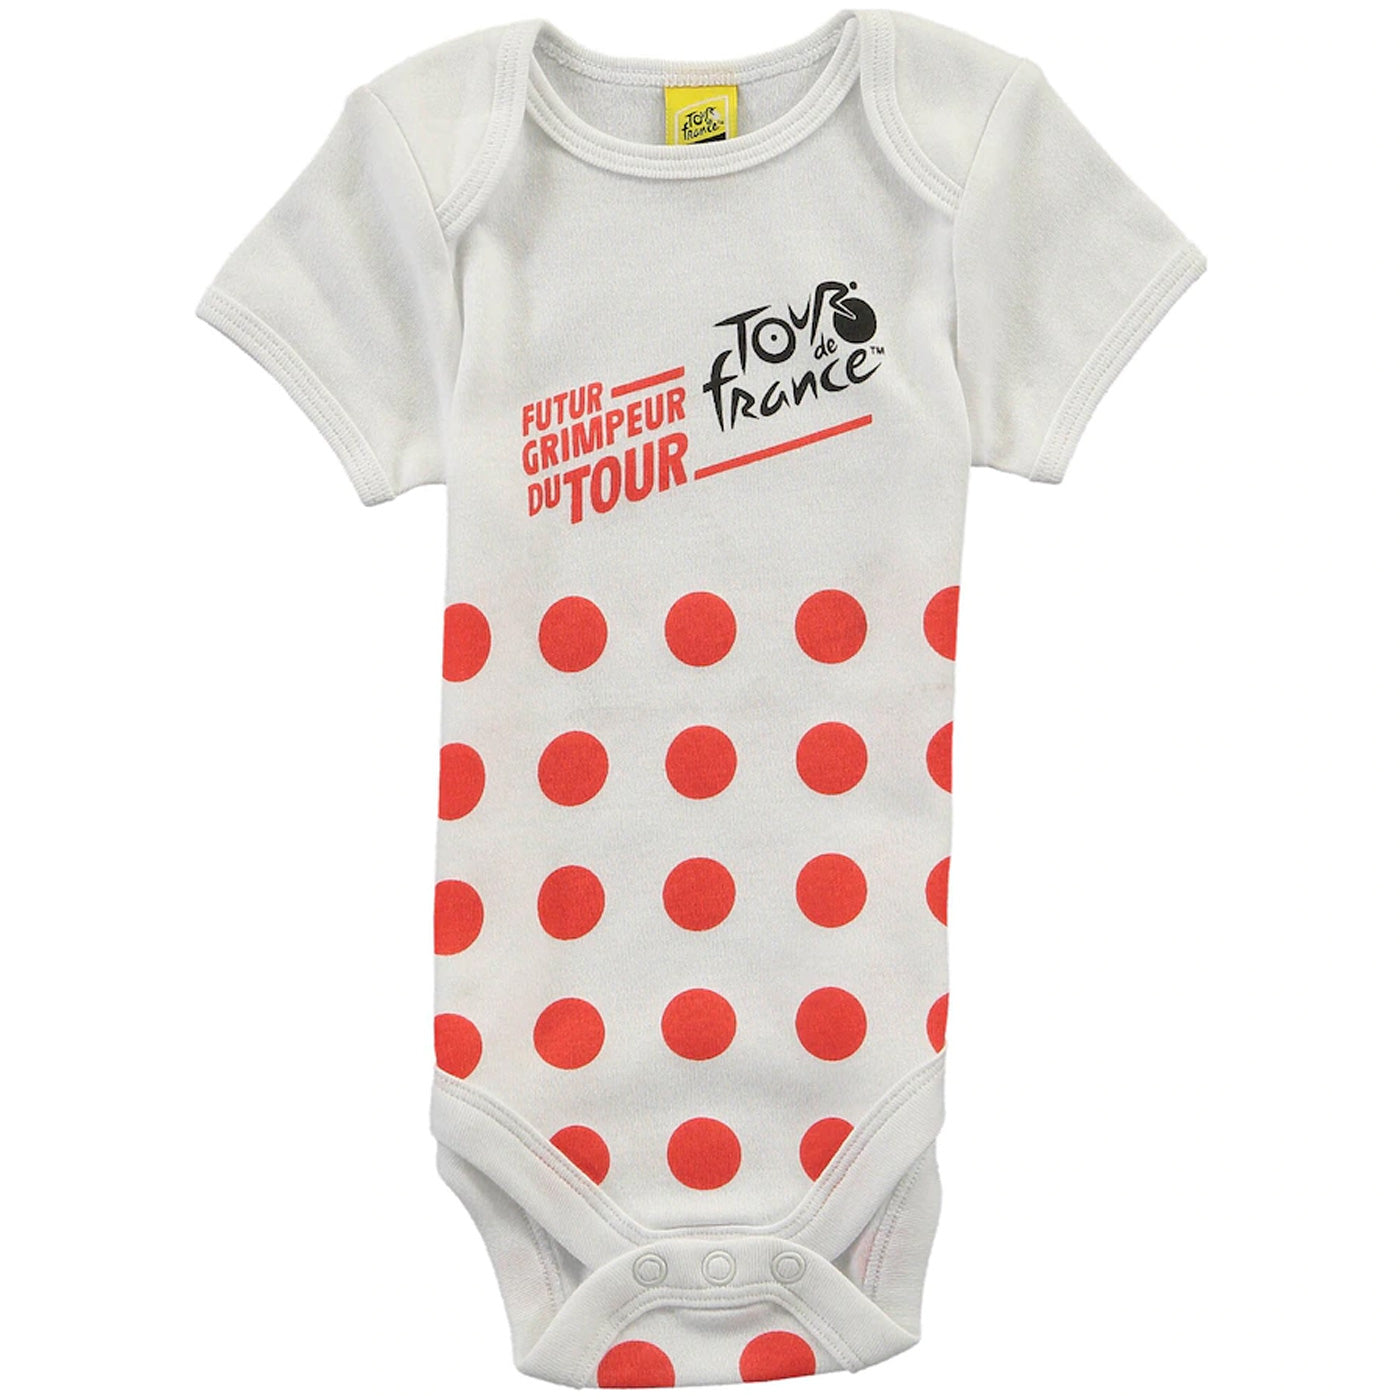 Tour de France 2022 baby body - Polka Dot